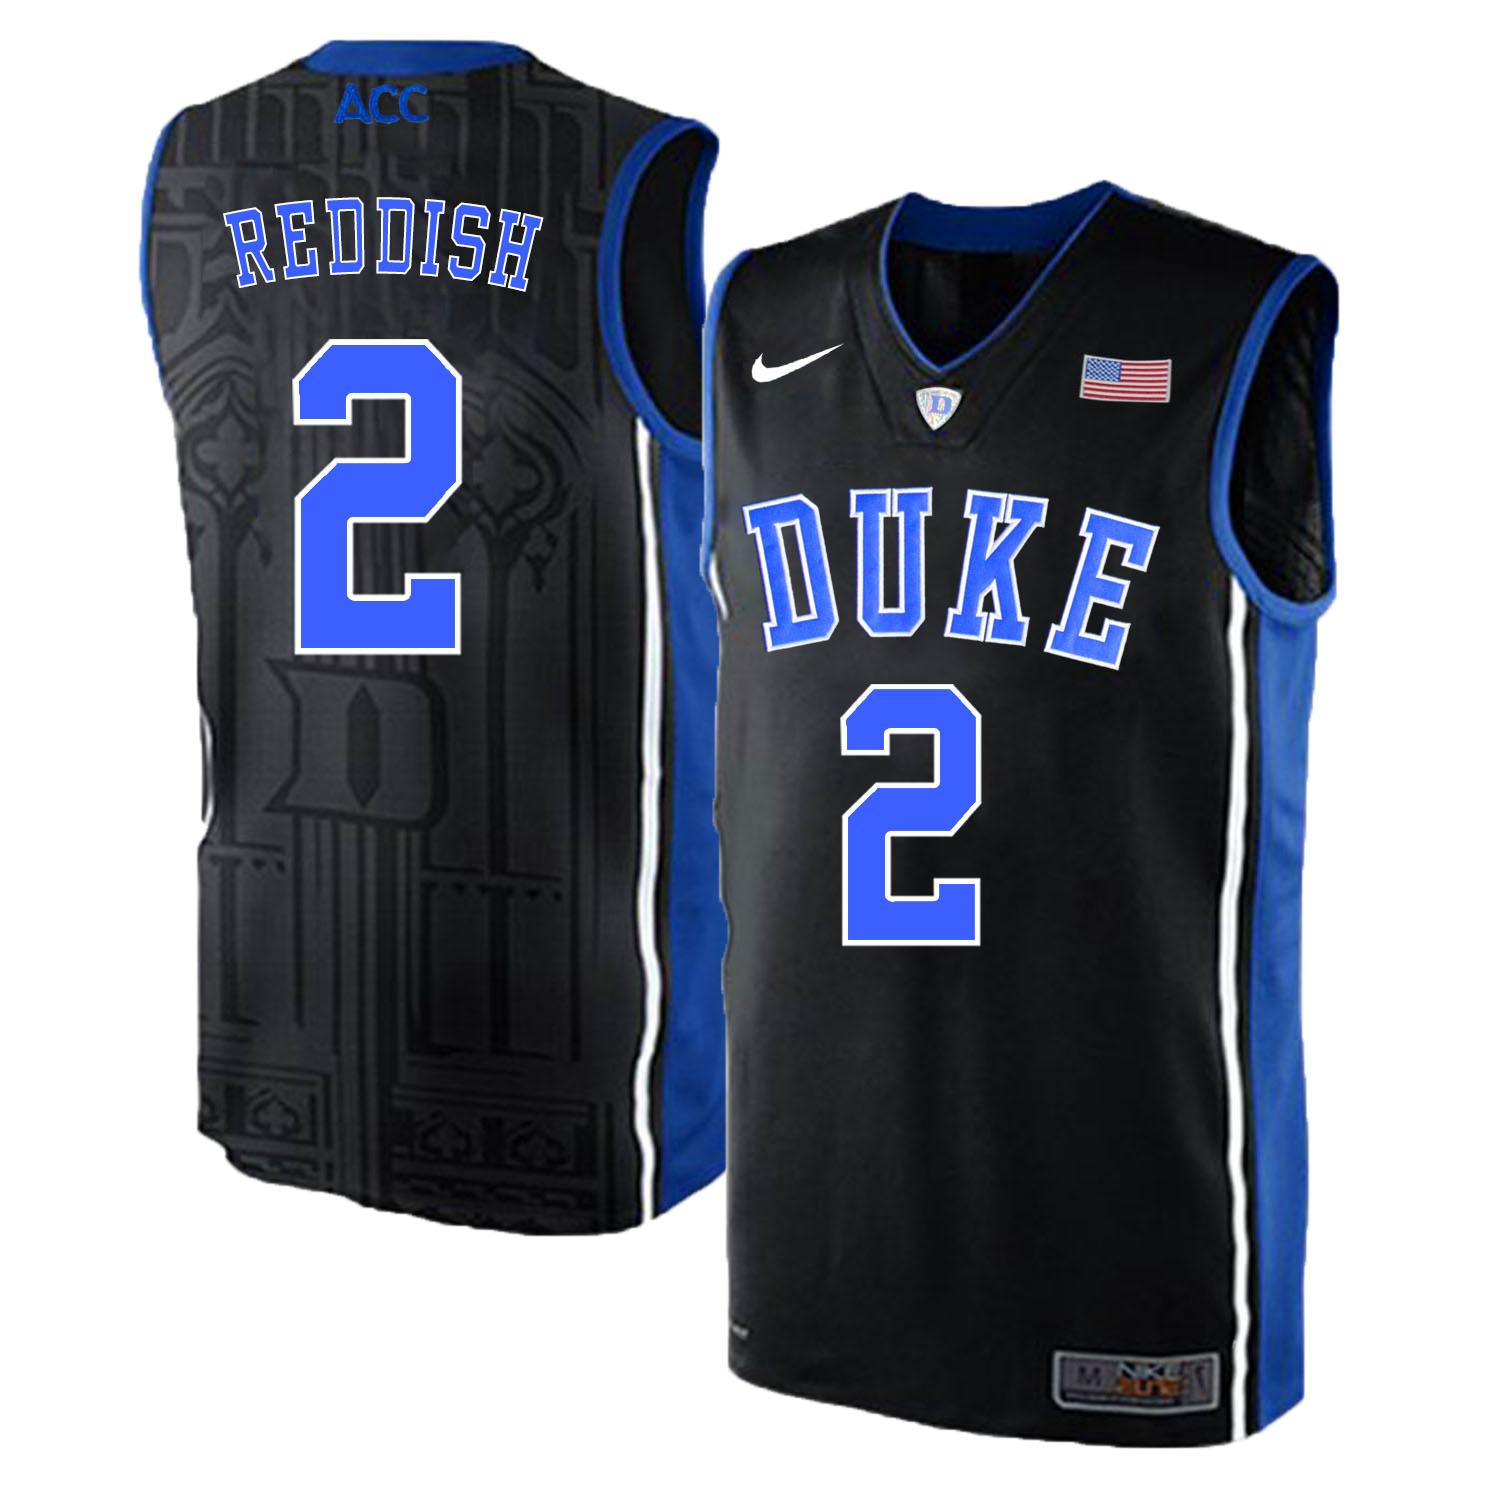 Duke Blue Devils 2 Cam Reddish Black Elite Nike College Basketball Jersey